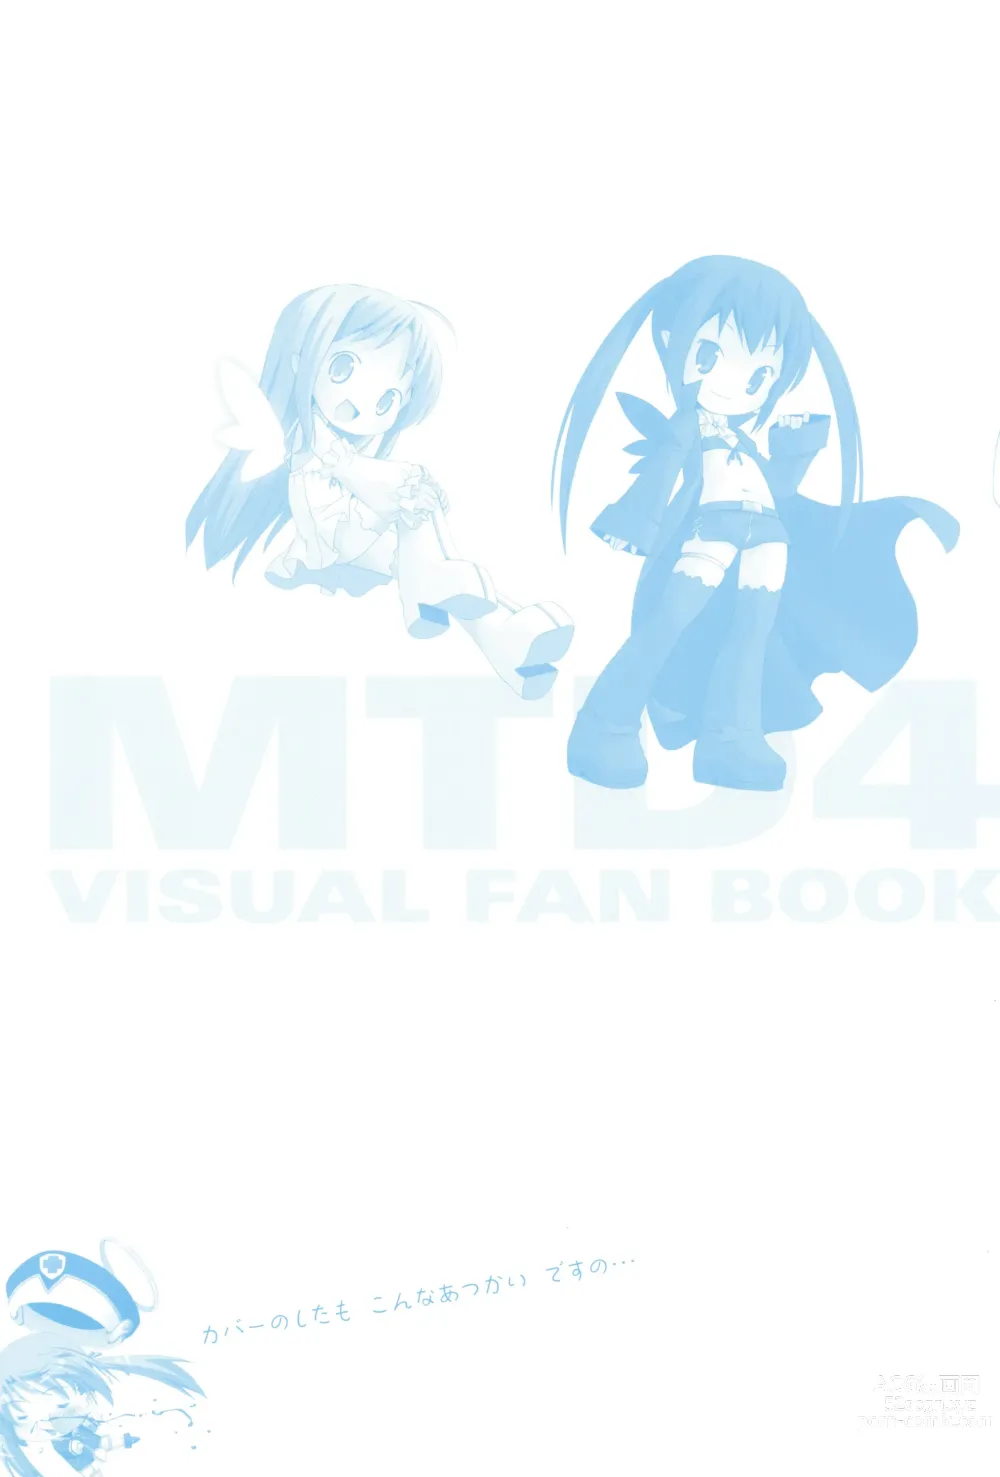 Page 134 of manga Makai Tenshi Djibril 4 Official Fanbook